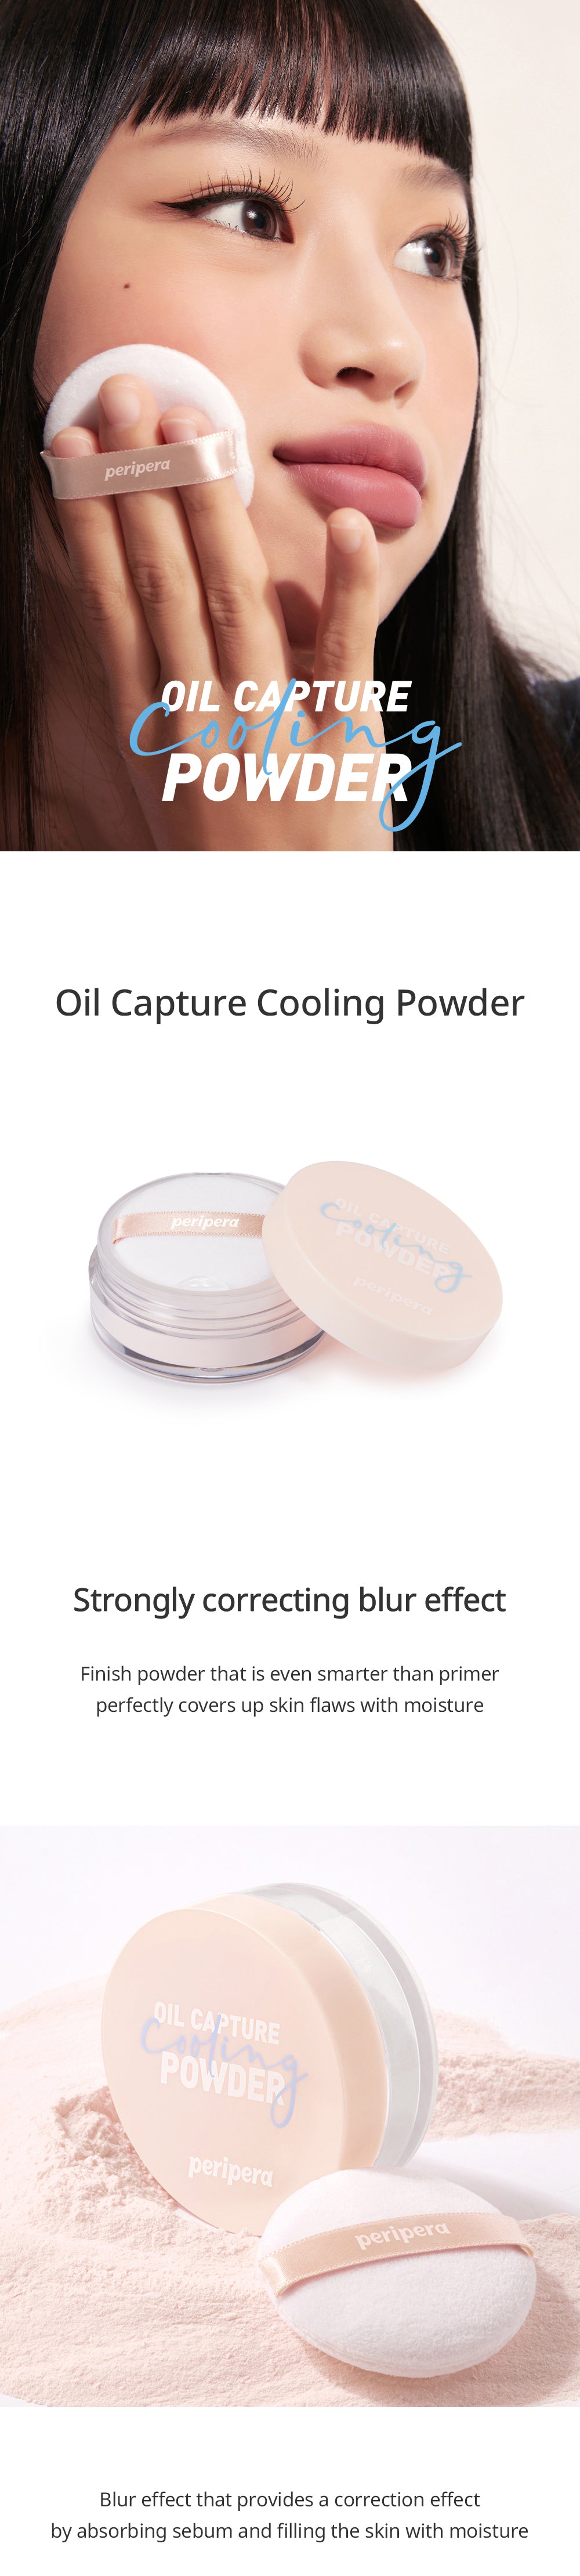 oil capture powder